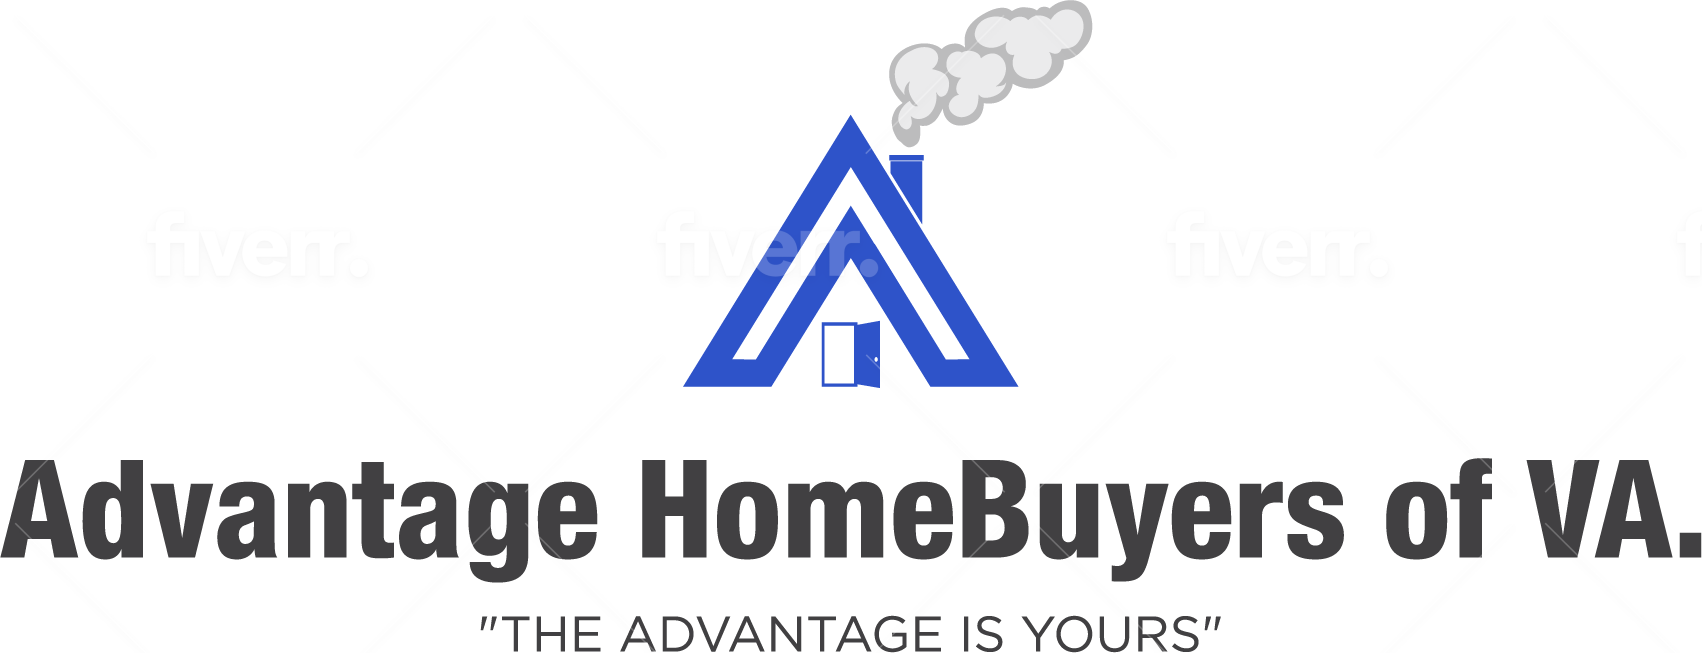 Advantage HomeBuyers of Va. logo